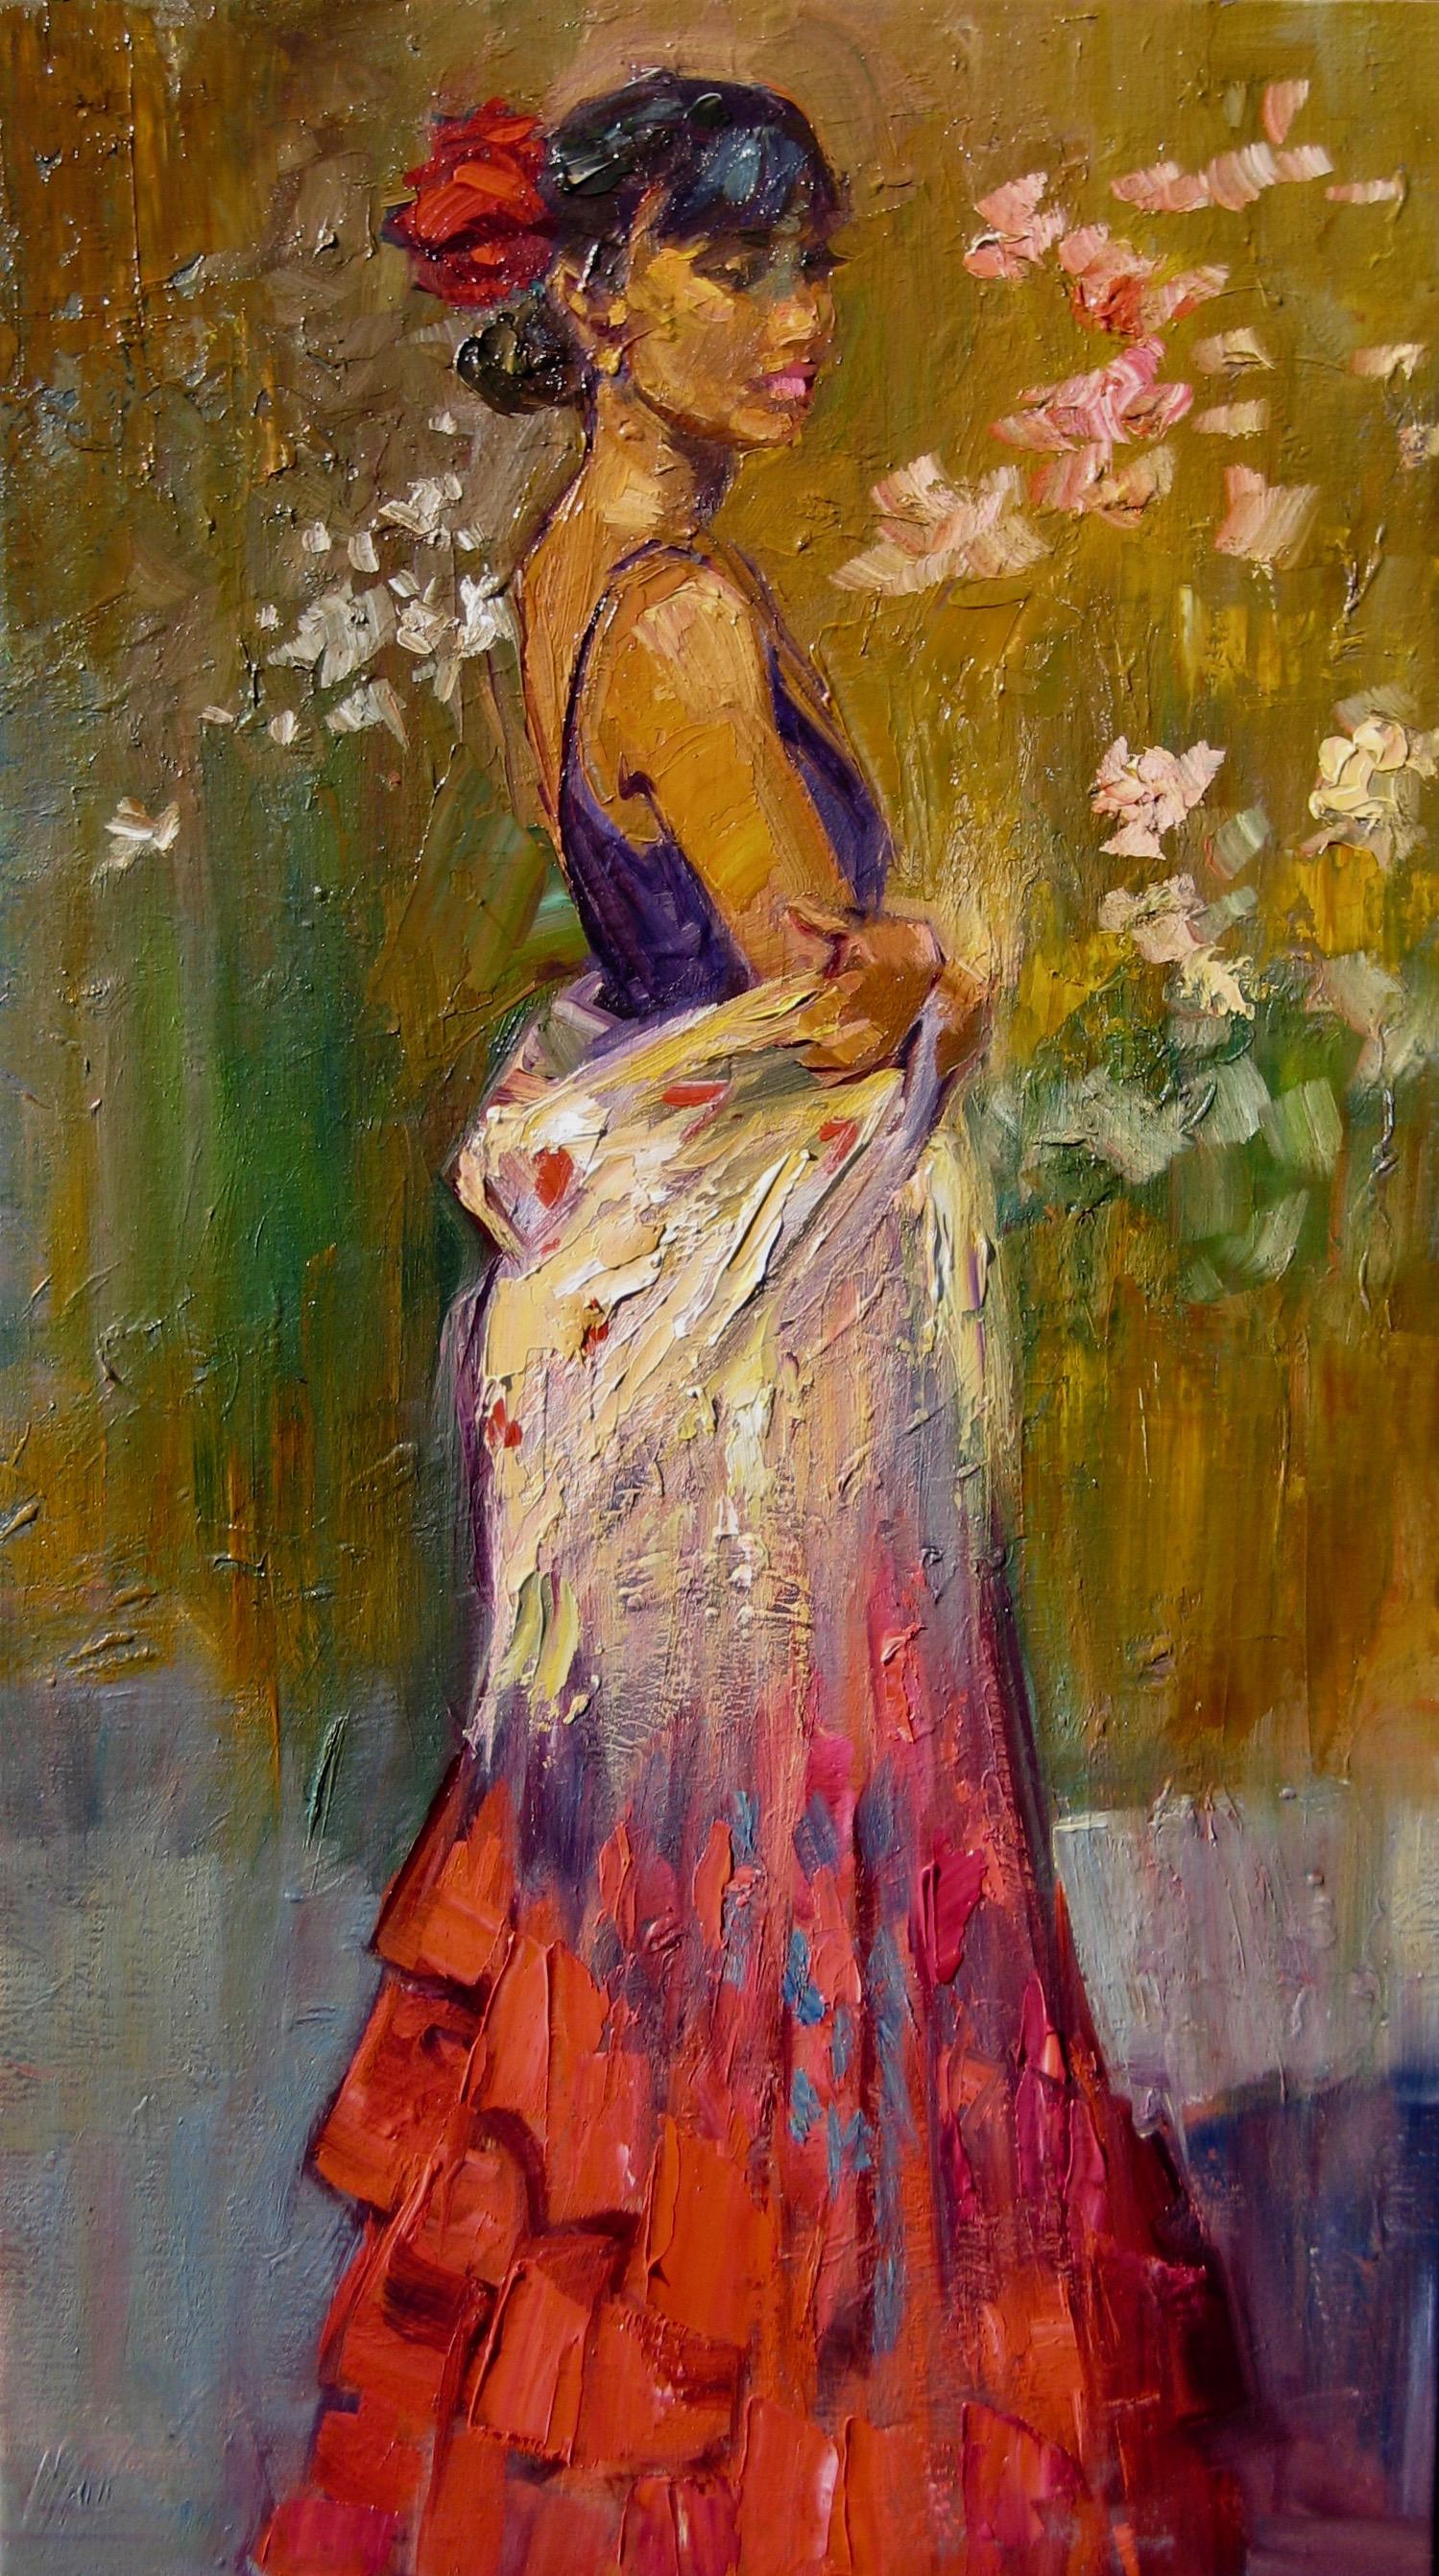 Maria Bertrán Landscape Painting - "Flamenco Dancer" Contemporary Impressionist Figure Oil Painting of Dancer